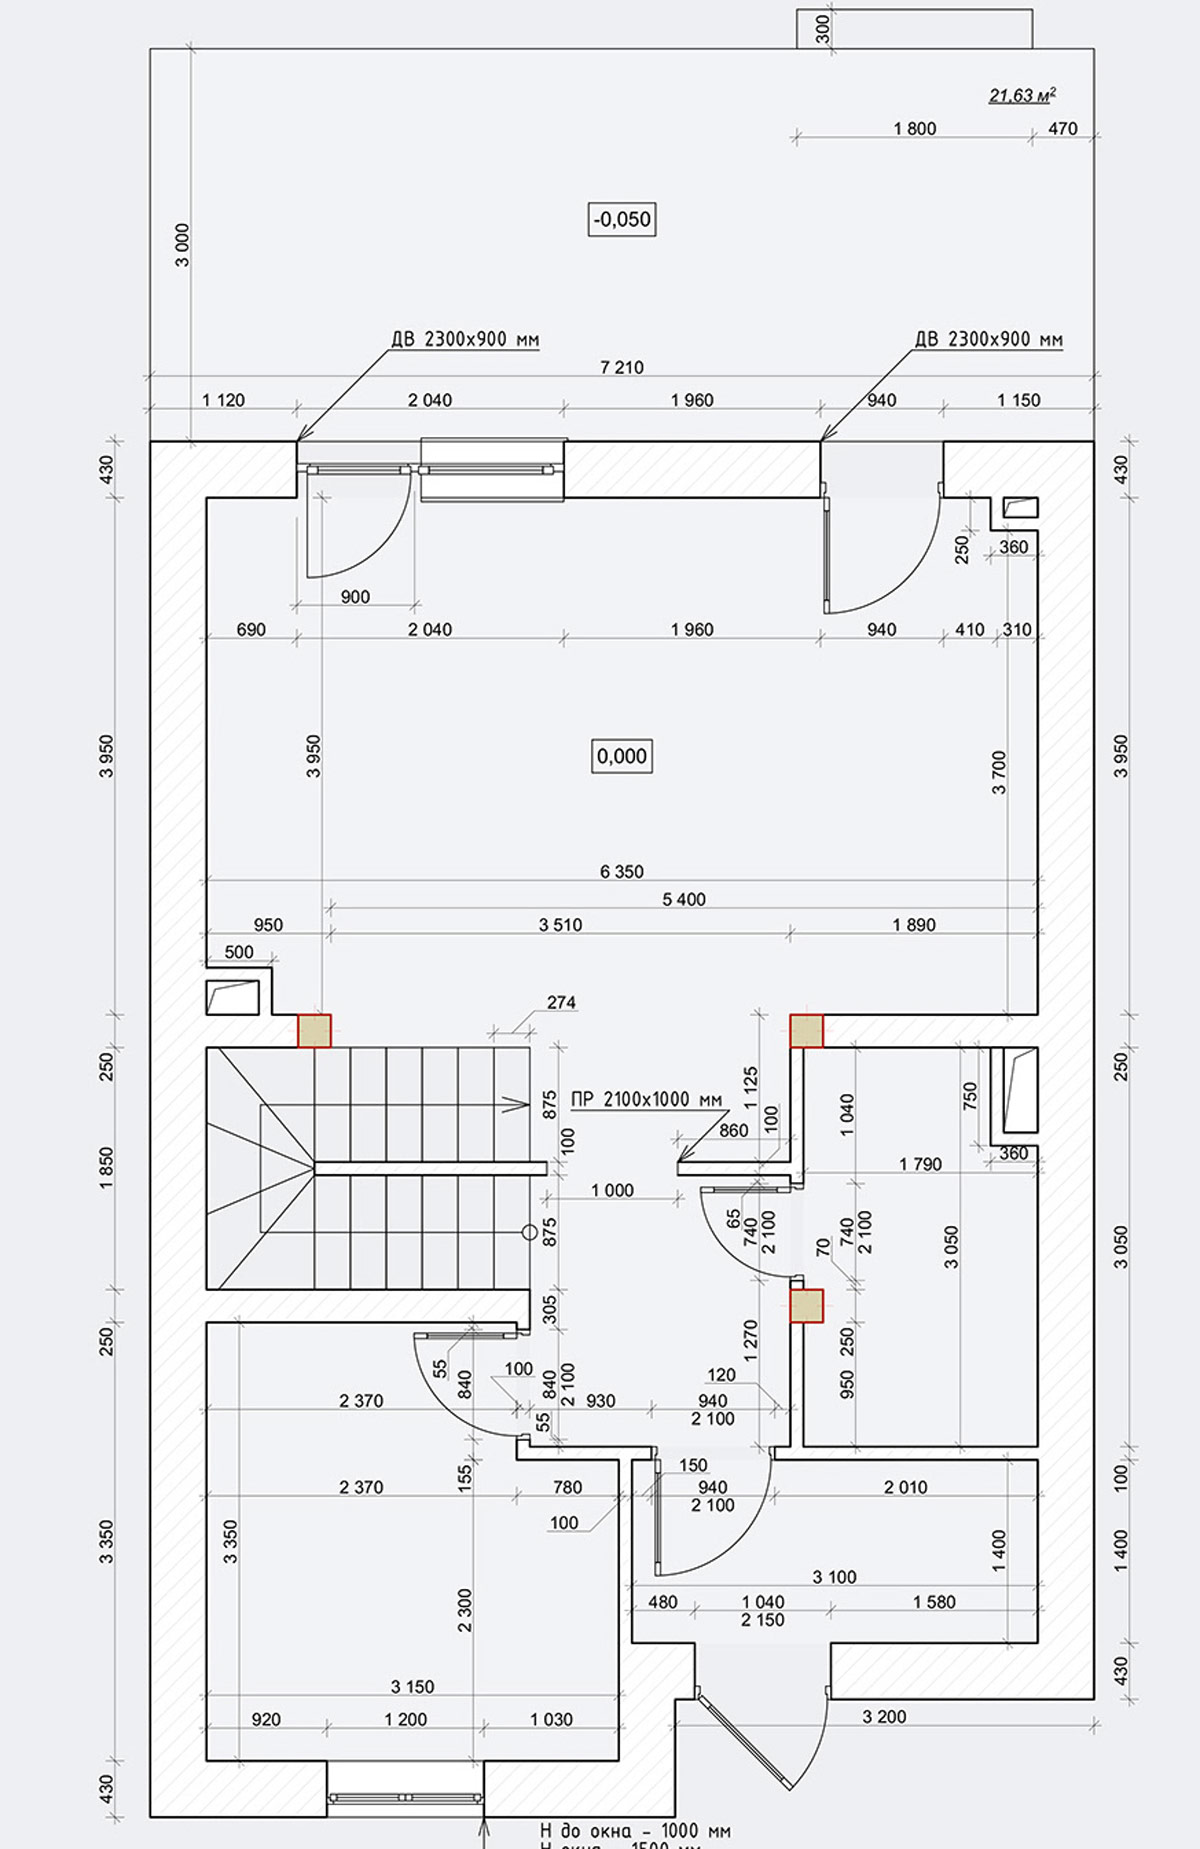 floor-plan-with-dimensions-600x925.jpg